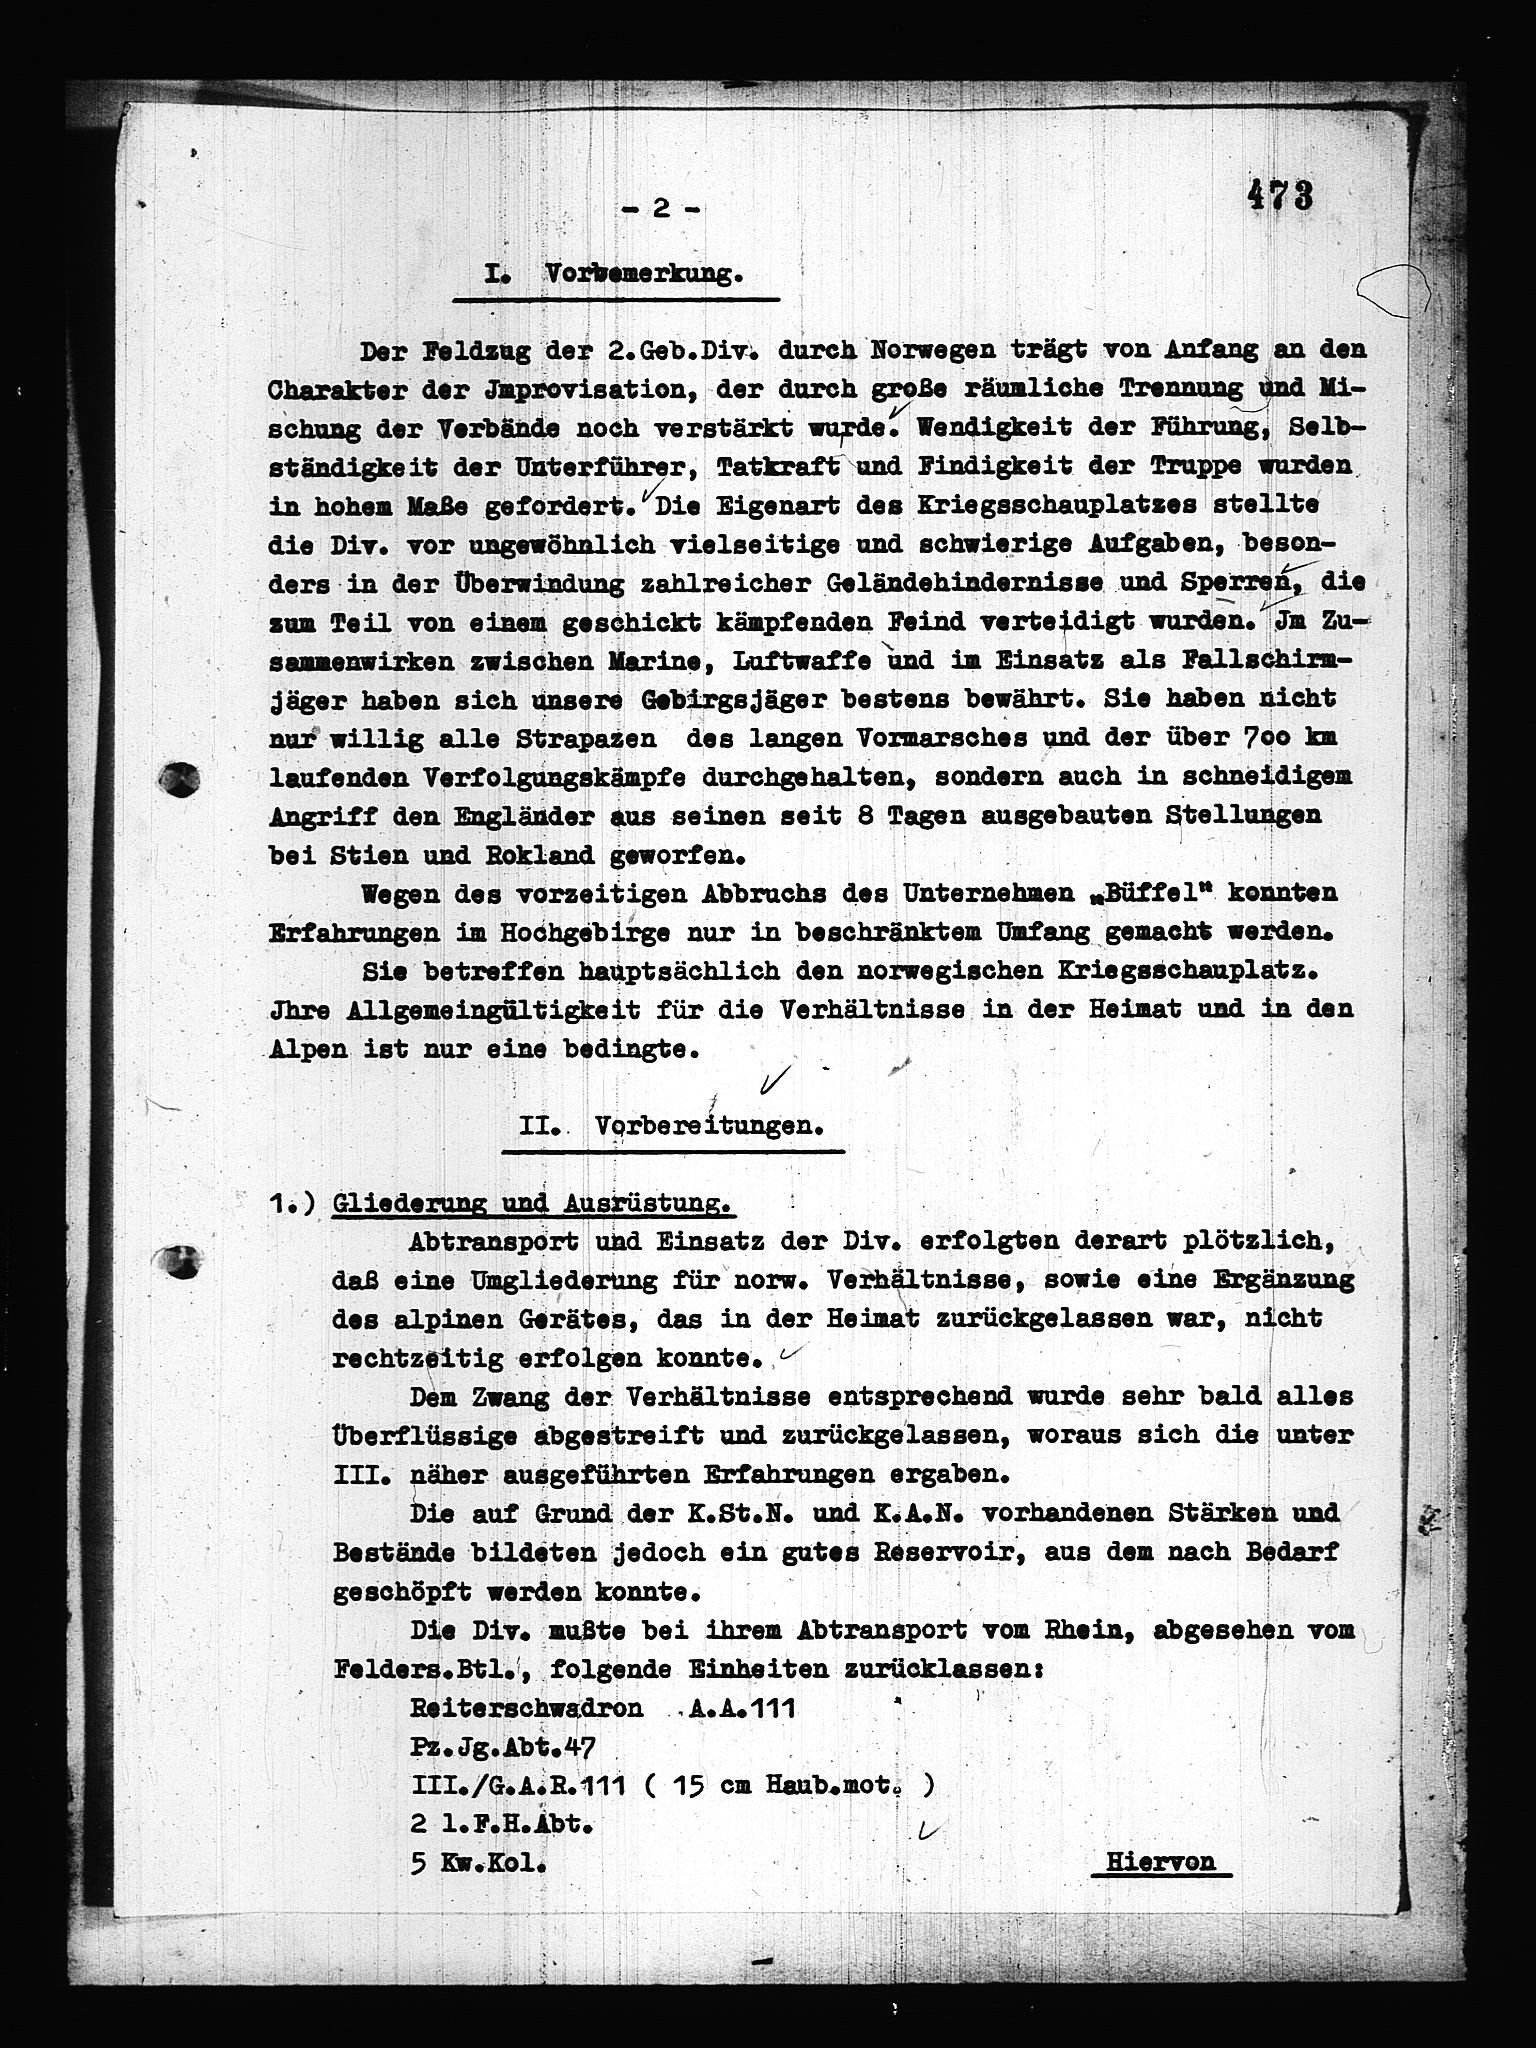 Documents Section, RA/RAFA-2200/V/L0082: Amerikansk mikrofilm "Captured German Documents".
Box No. 721.  FKA jnr. 619/1954., 1940, s. 4